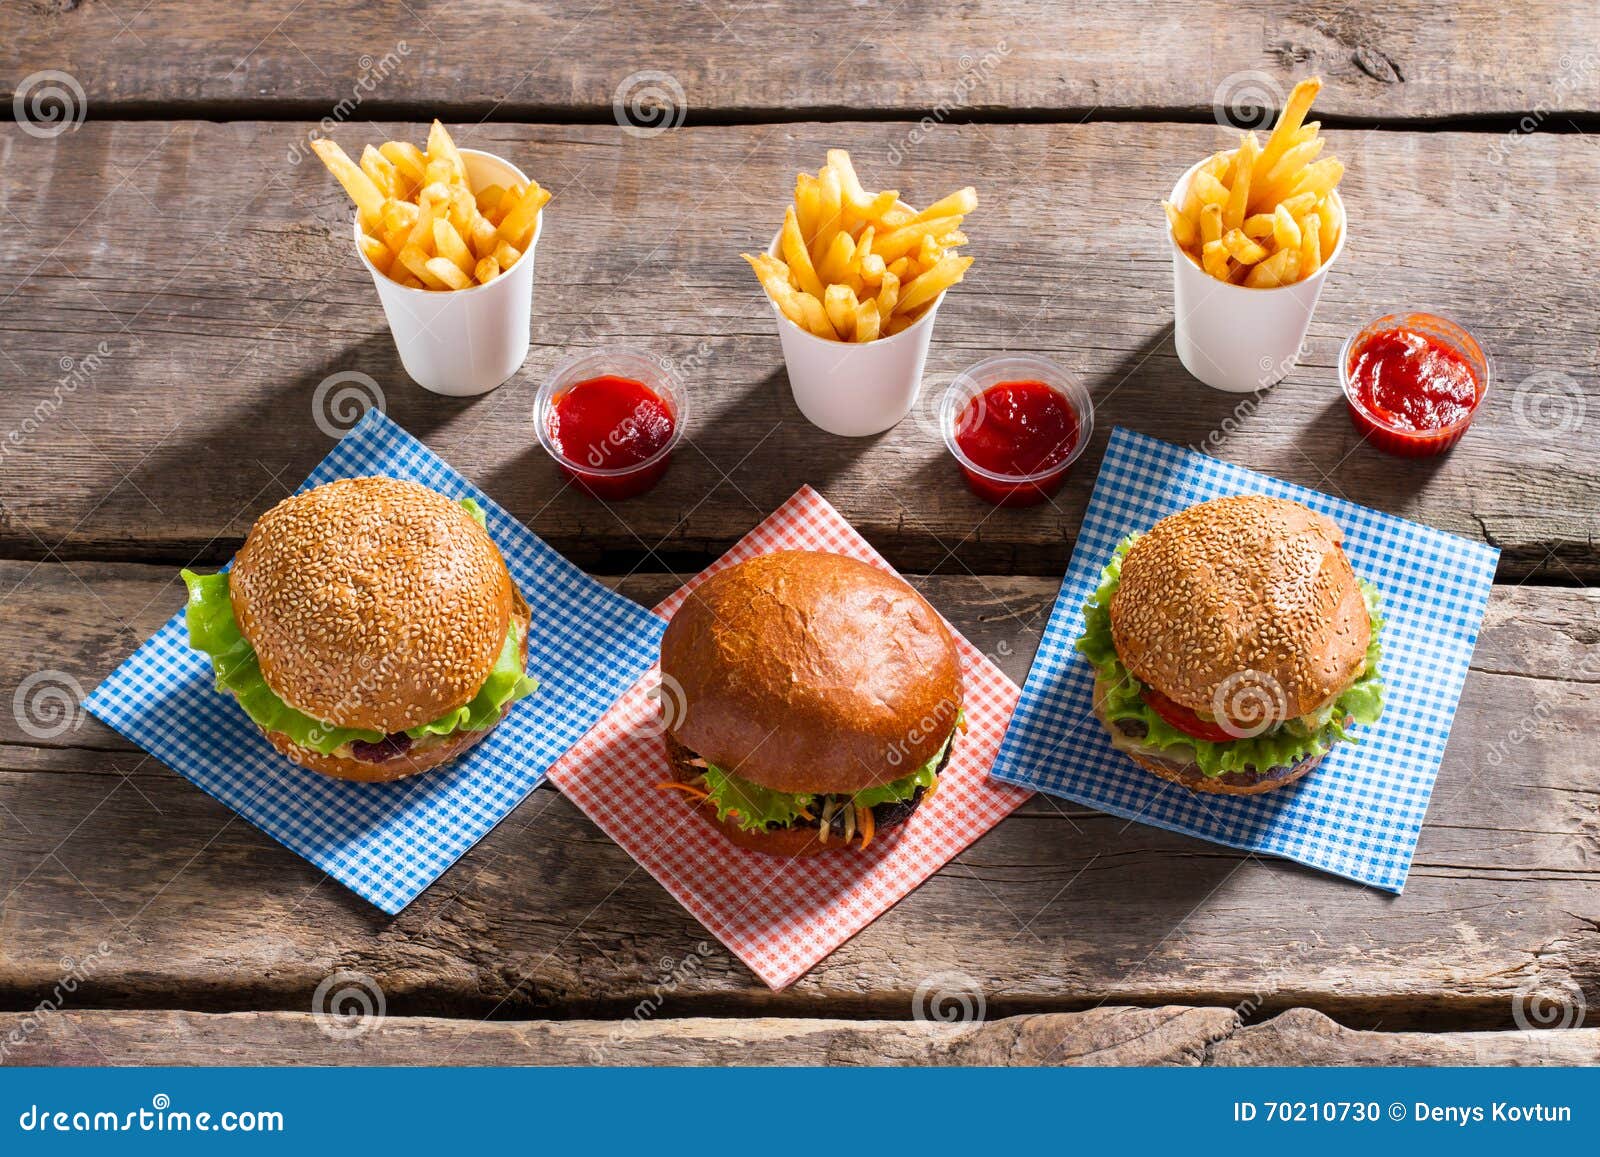 Burgers With Ketchup And Fries Stock Photo Image Of Burger Menu